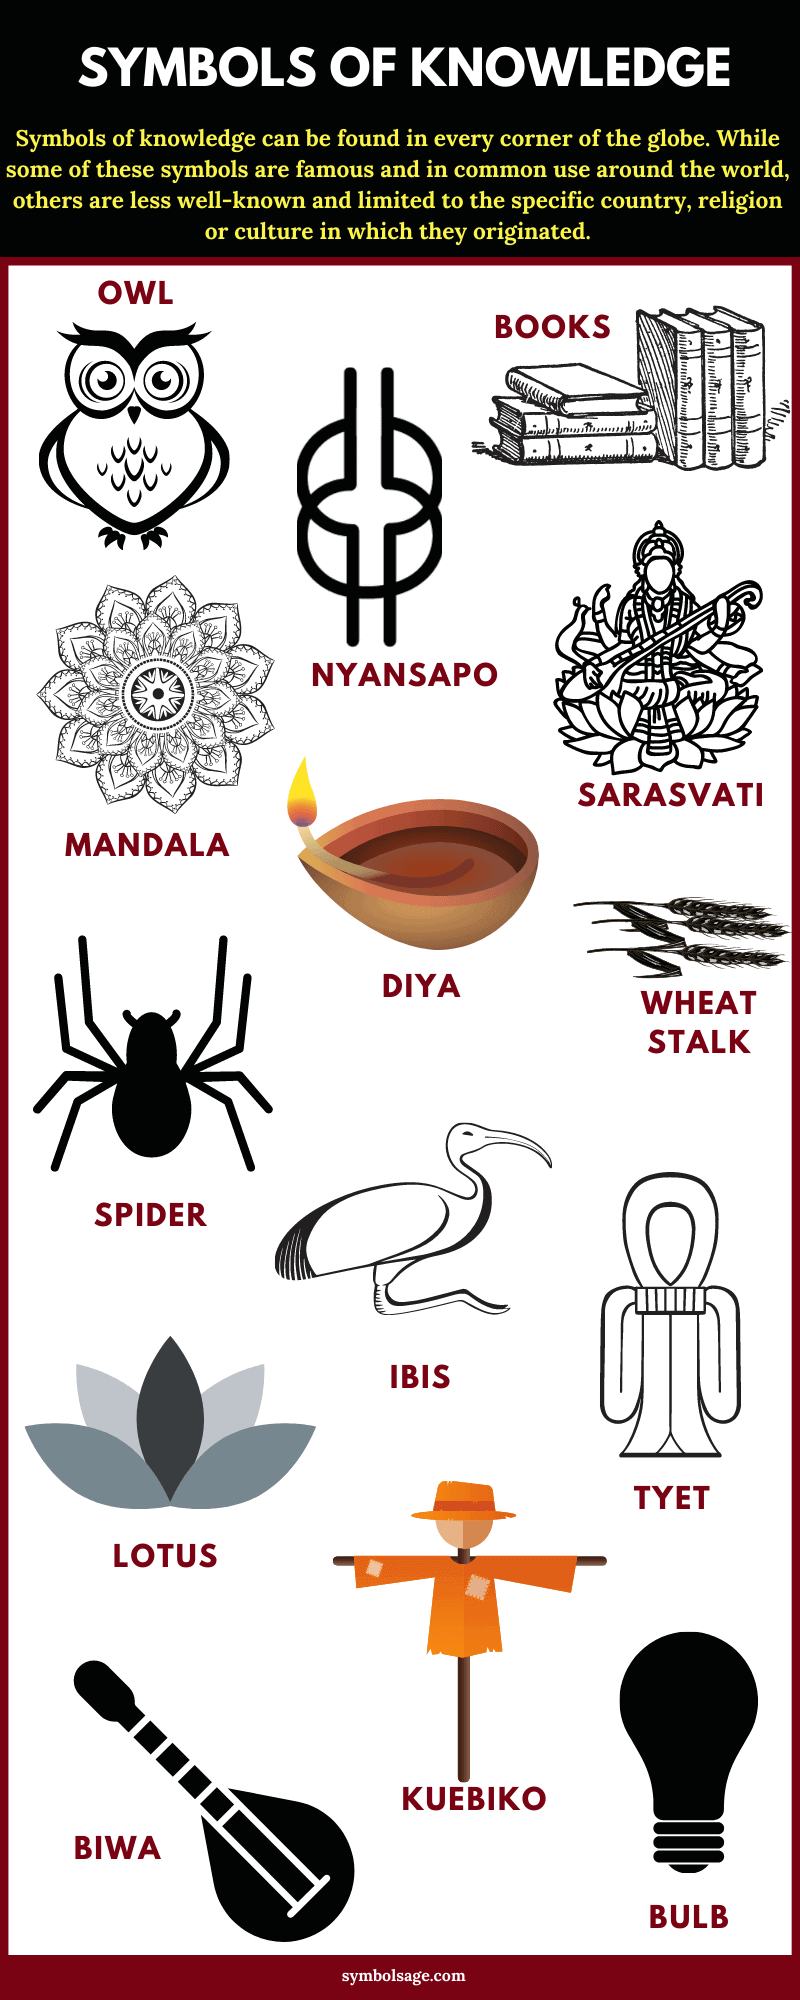 List of knowledge symbols